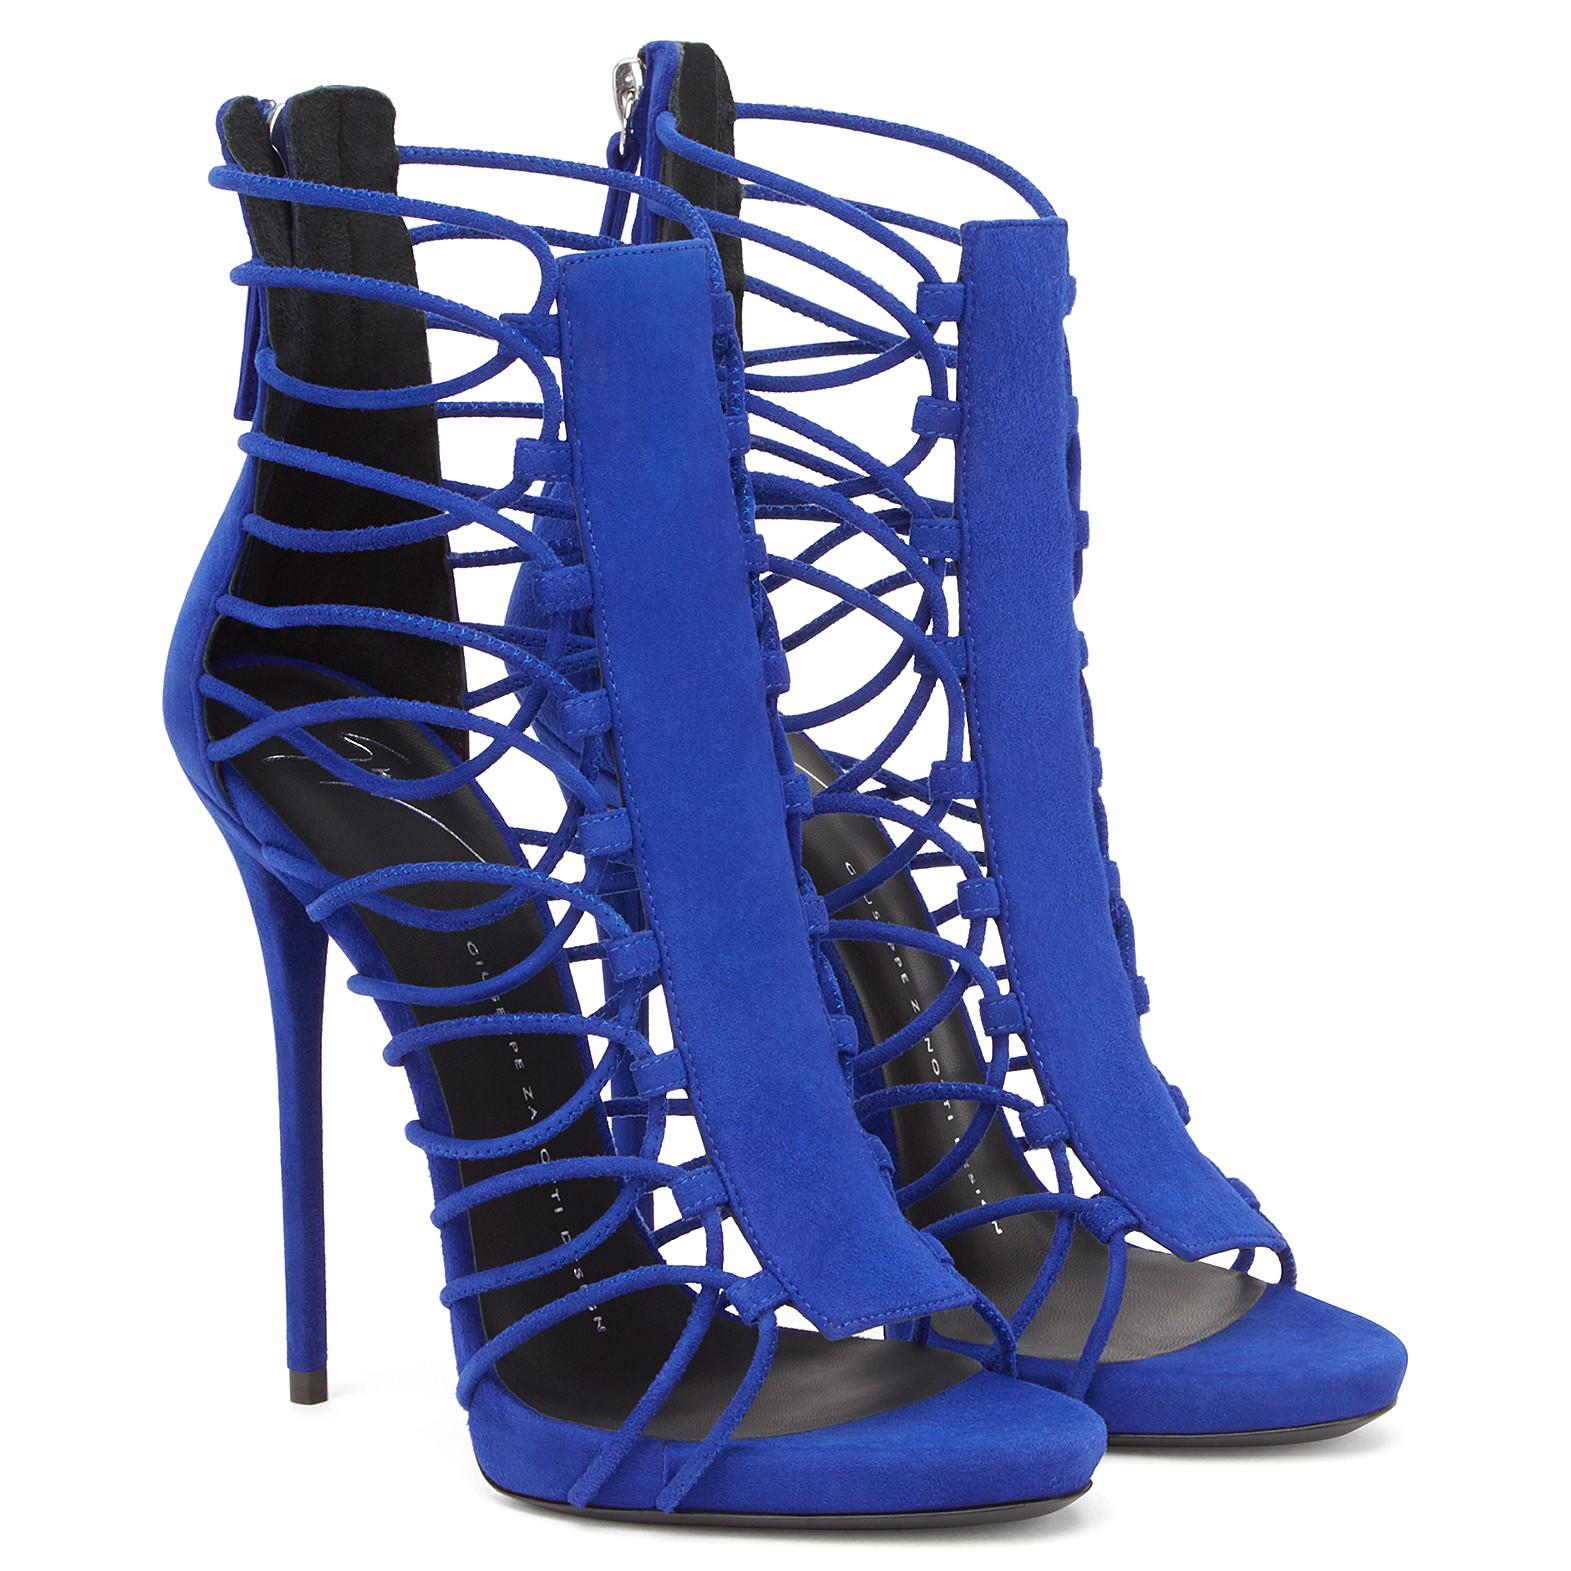 Women's Giuseppe Zanotti NEW Blue Suede Gladiator Evening Evening Sandals Heels in Box